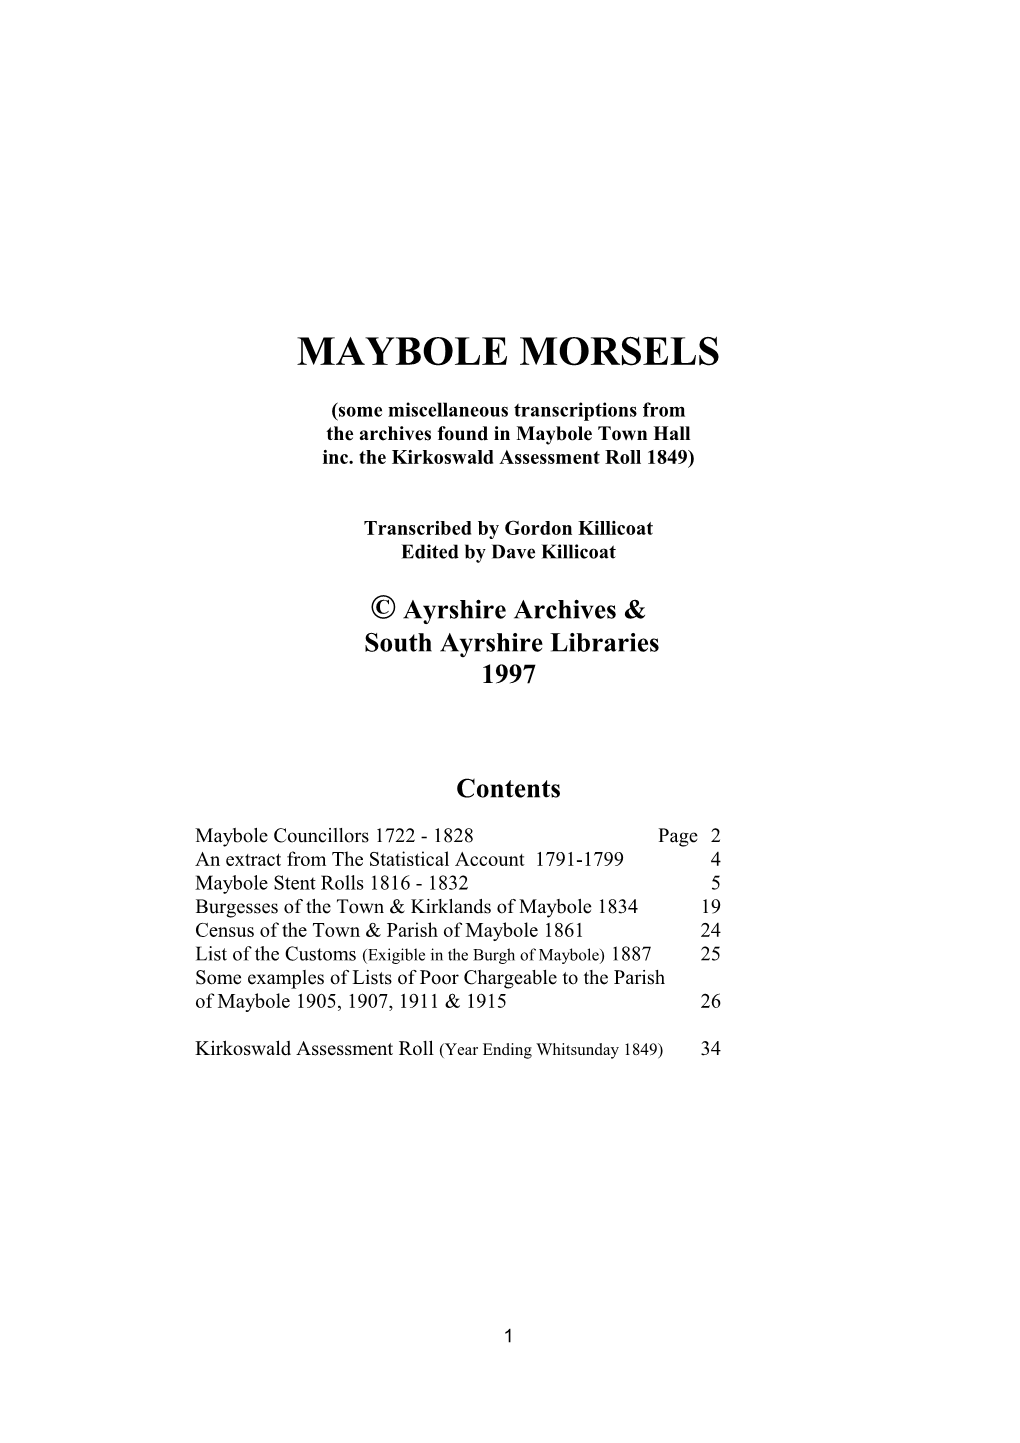 The Stent Rolls Of Maybole 1816 - 32